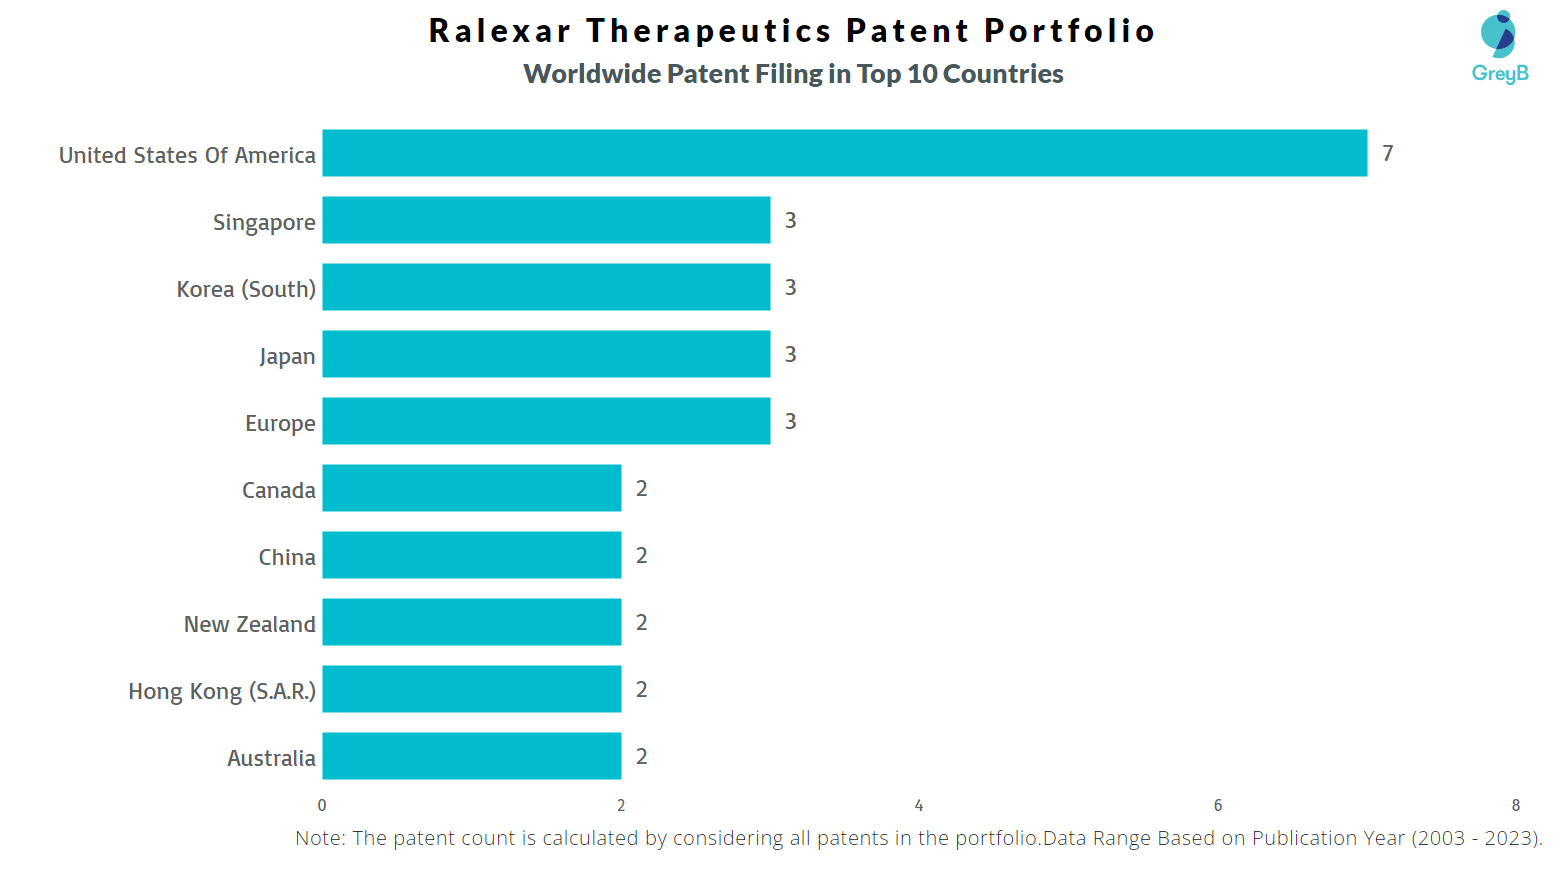 Ralexar Therapeutics Worldwide Patent Filing